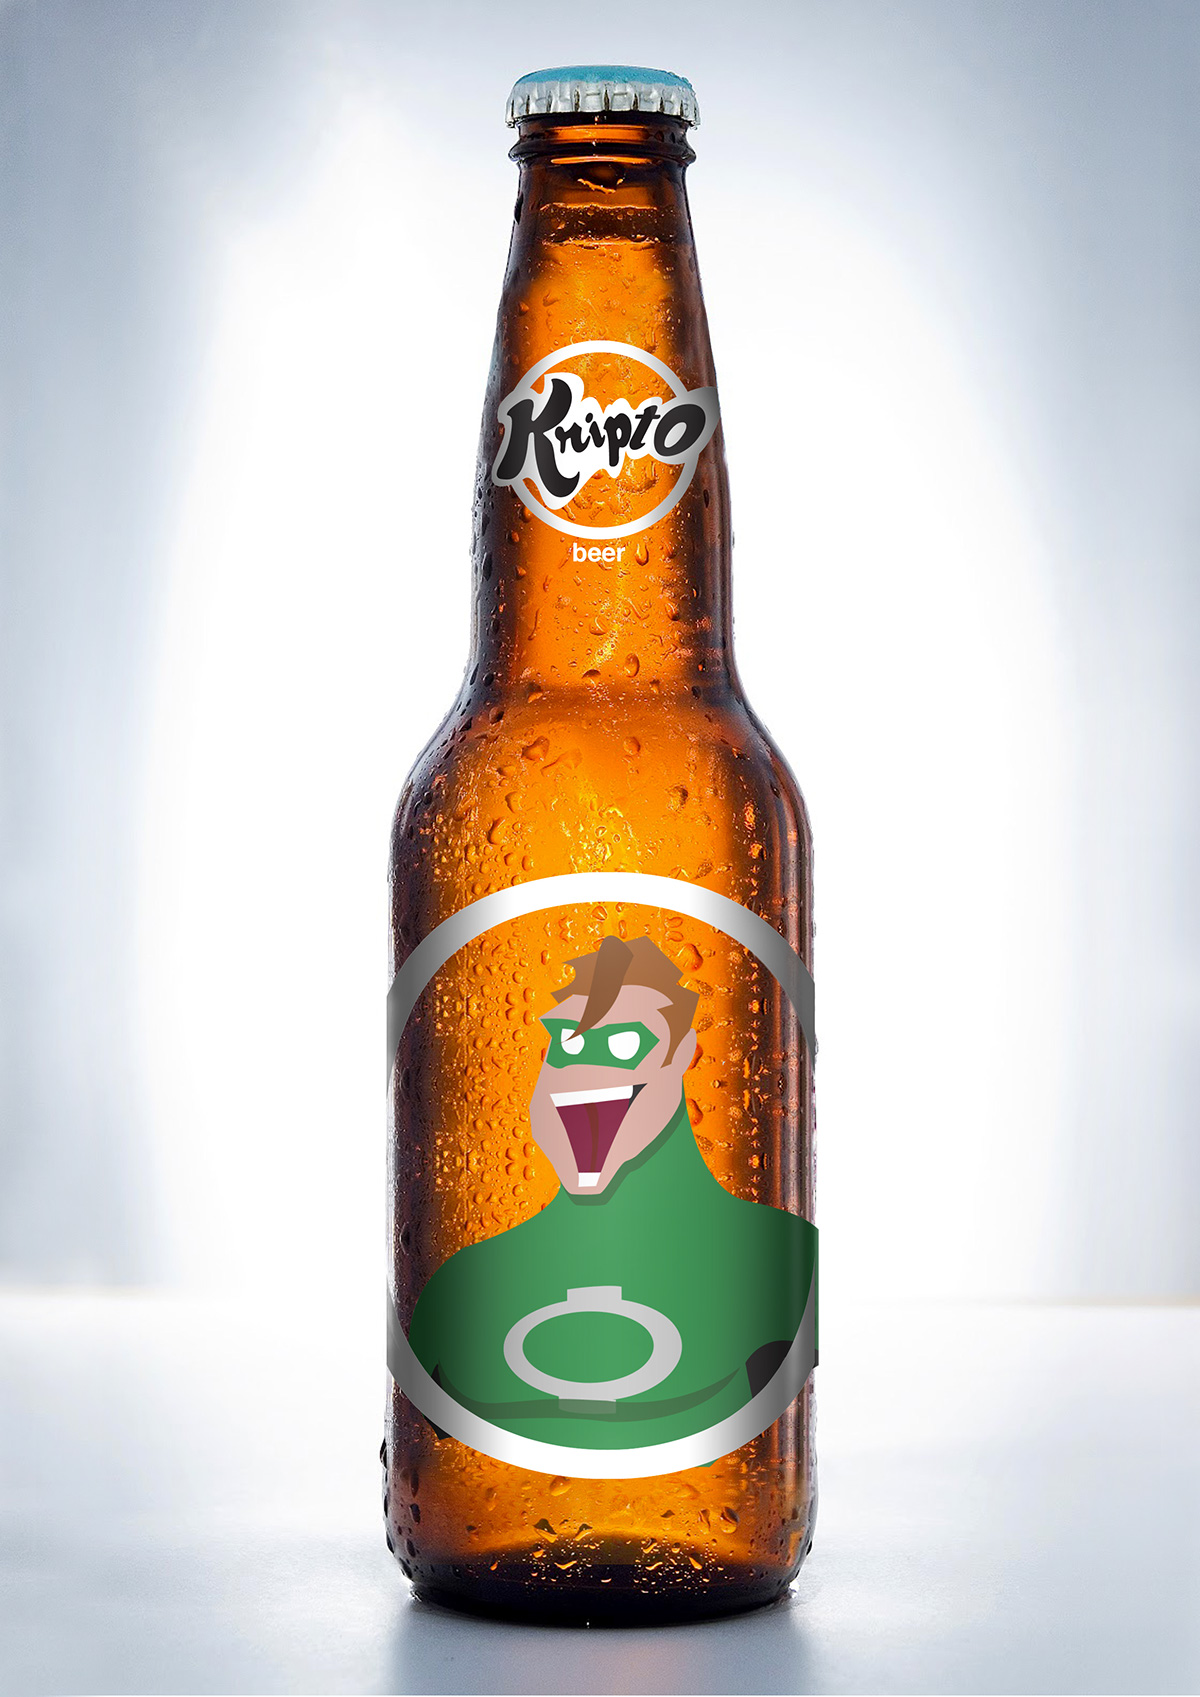 Green Lantern's version Kripto beer